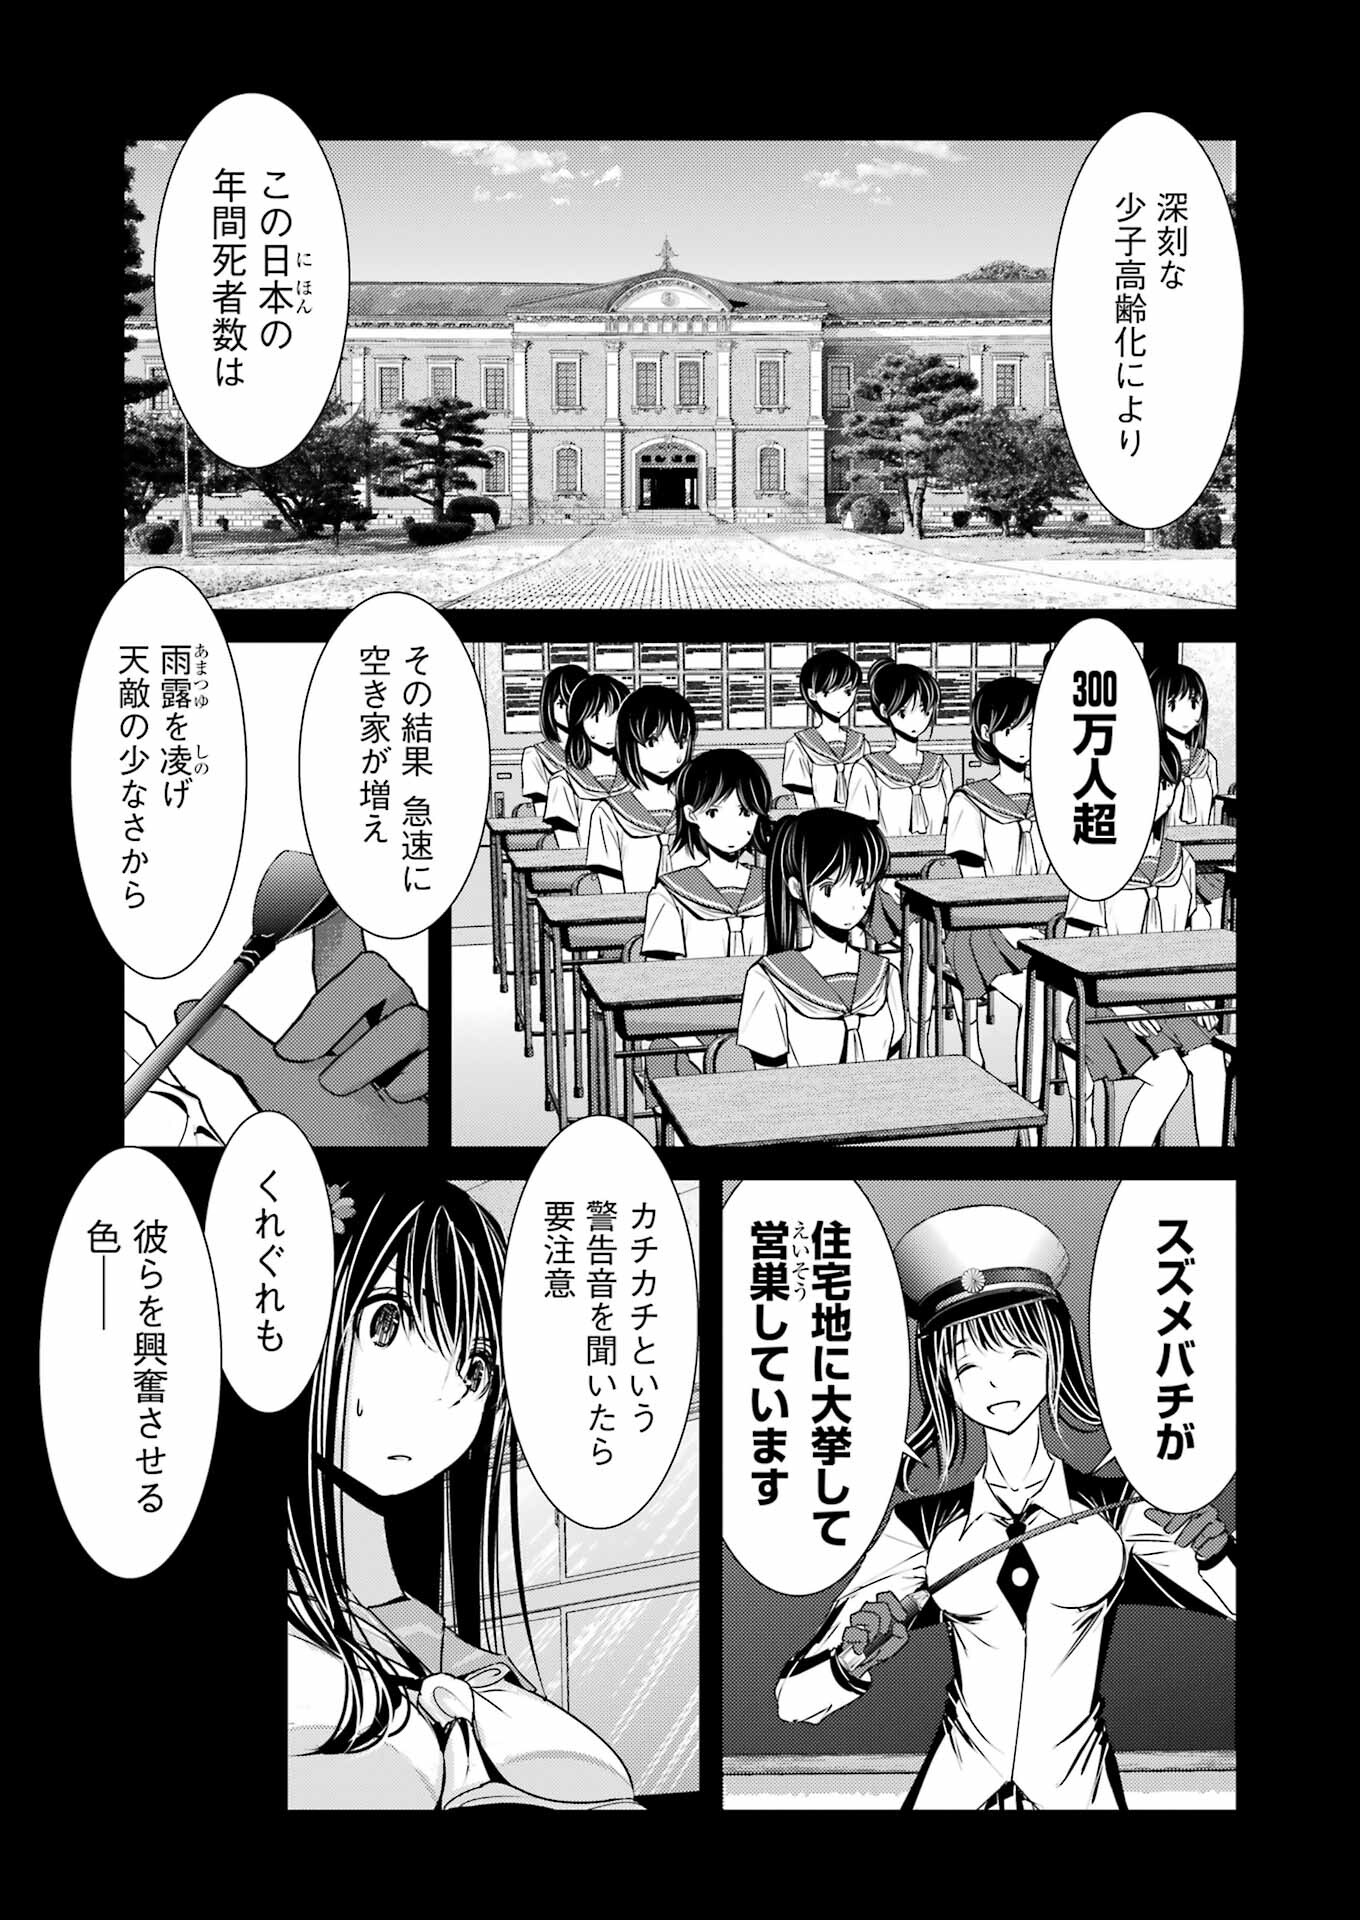 Suika wa Shoushika Tantou - Chapter 6 - Page 3